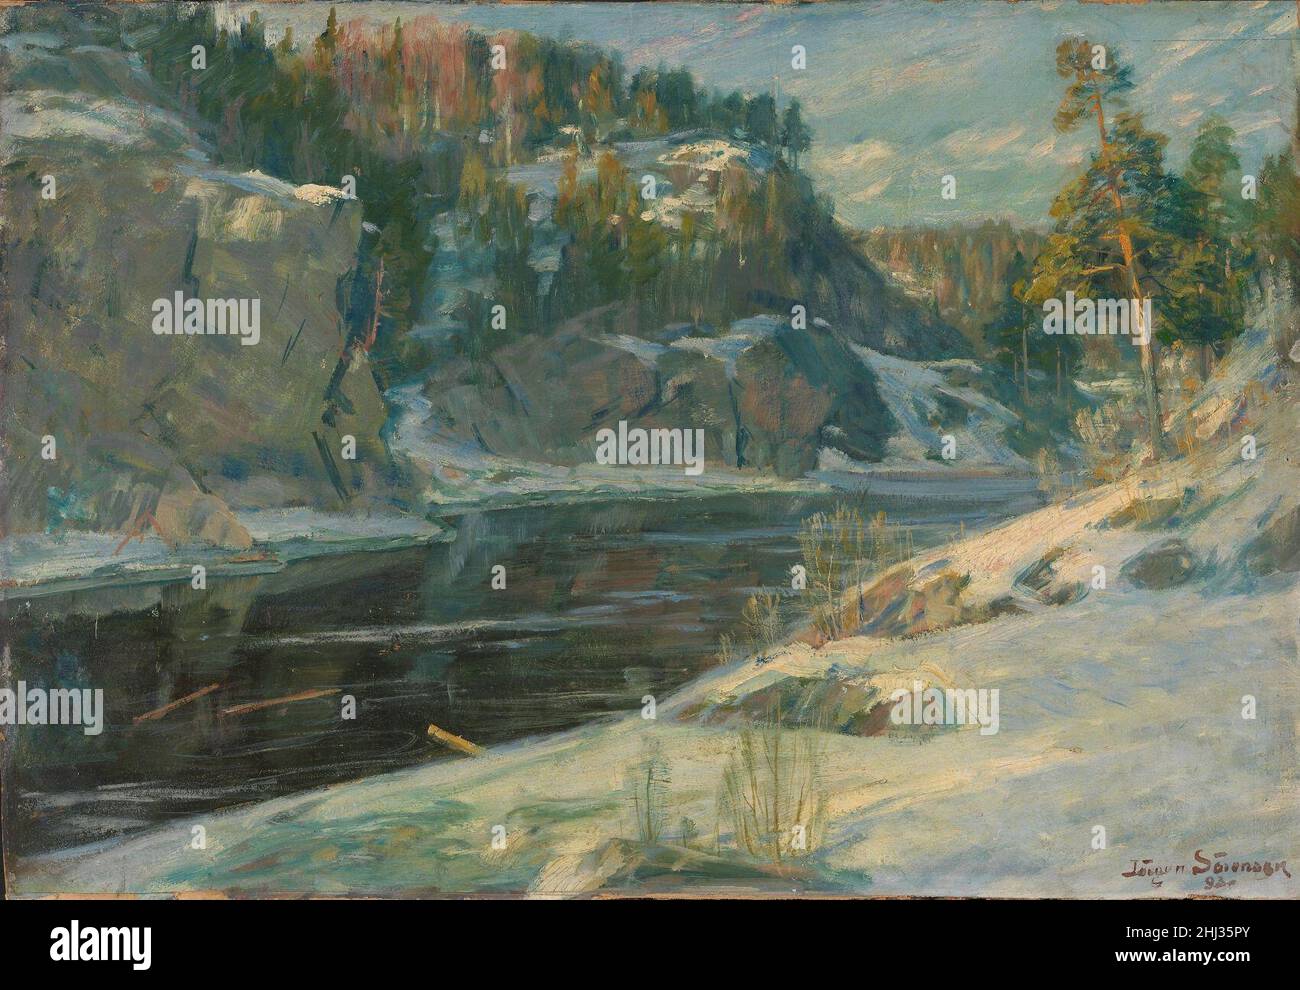 Jørgen Sørensen - paesaggio fluviale in inverno Foto Stock